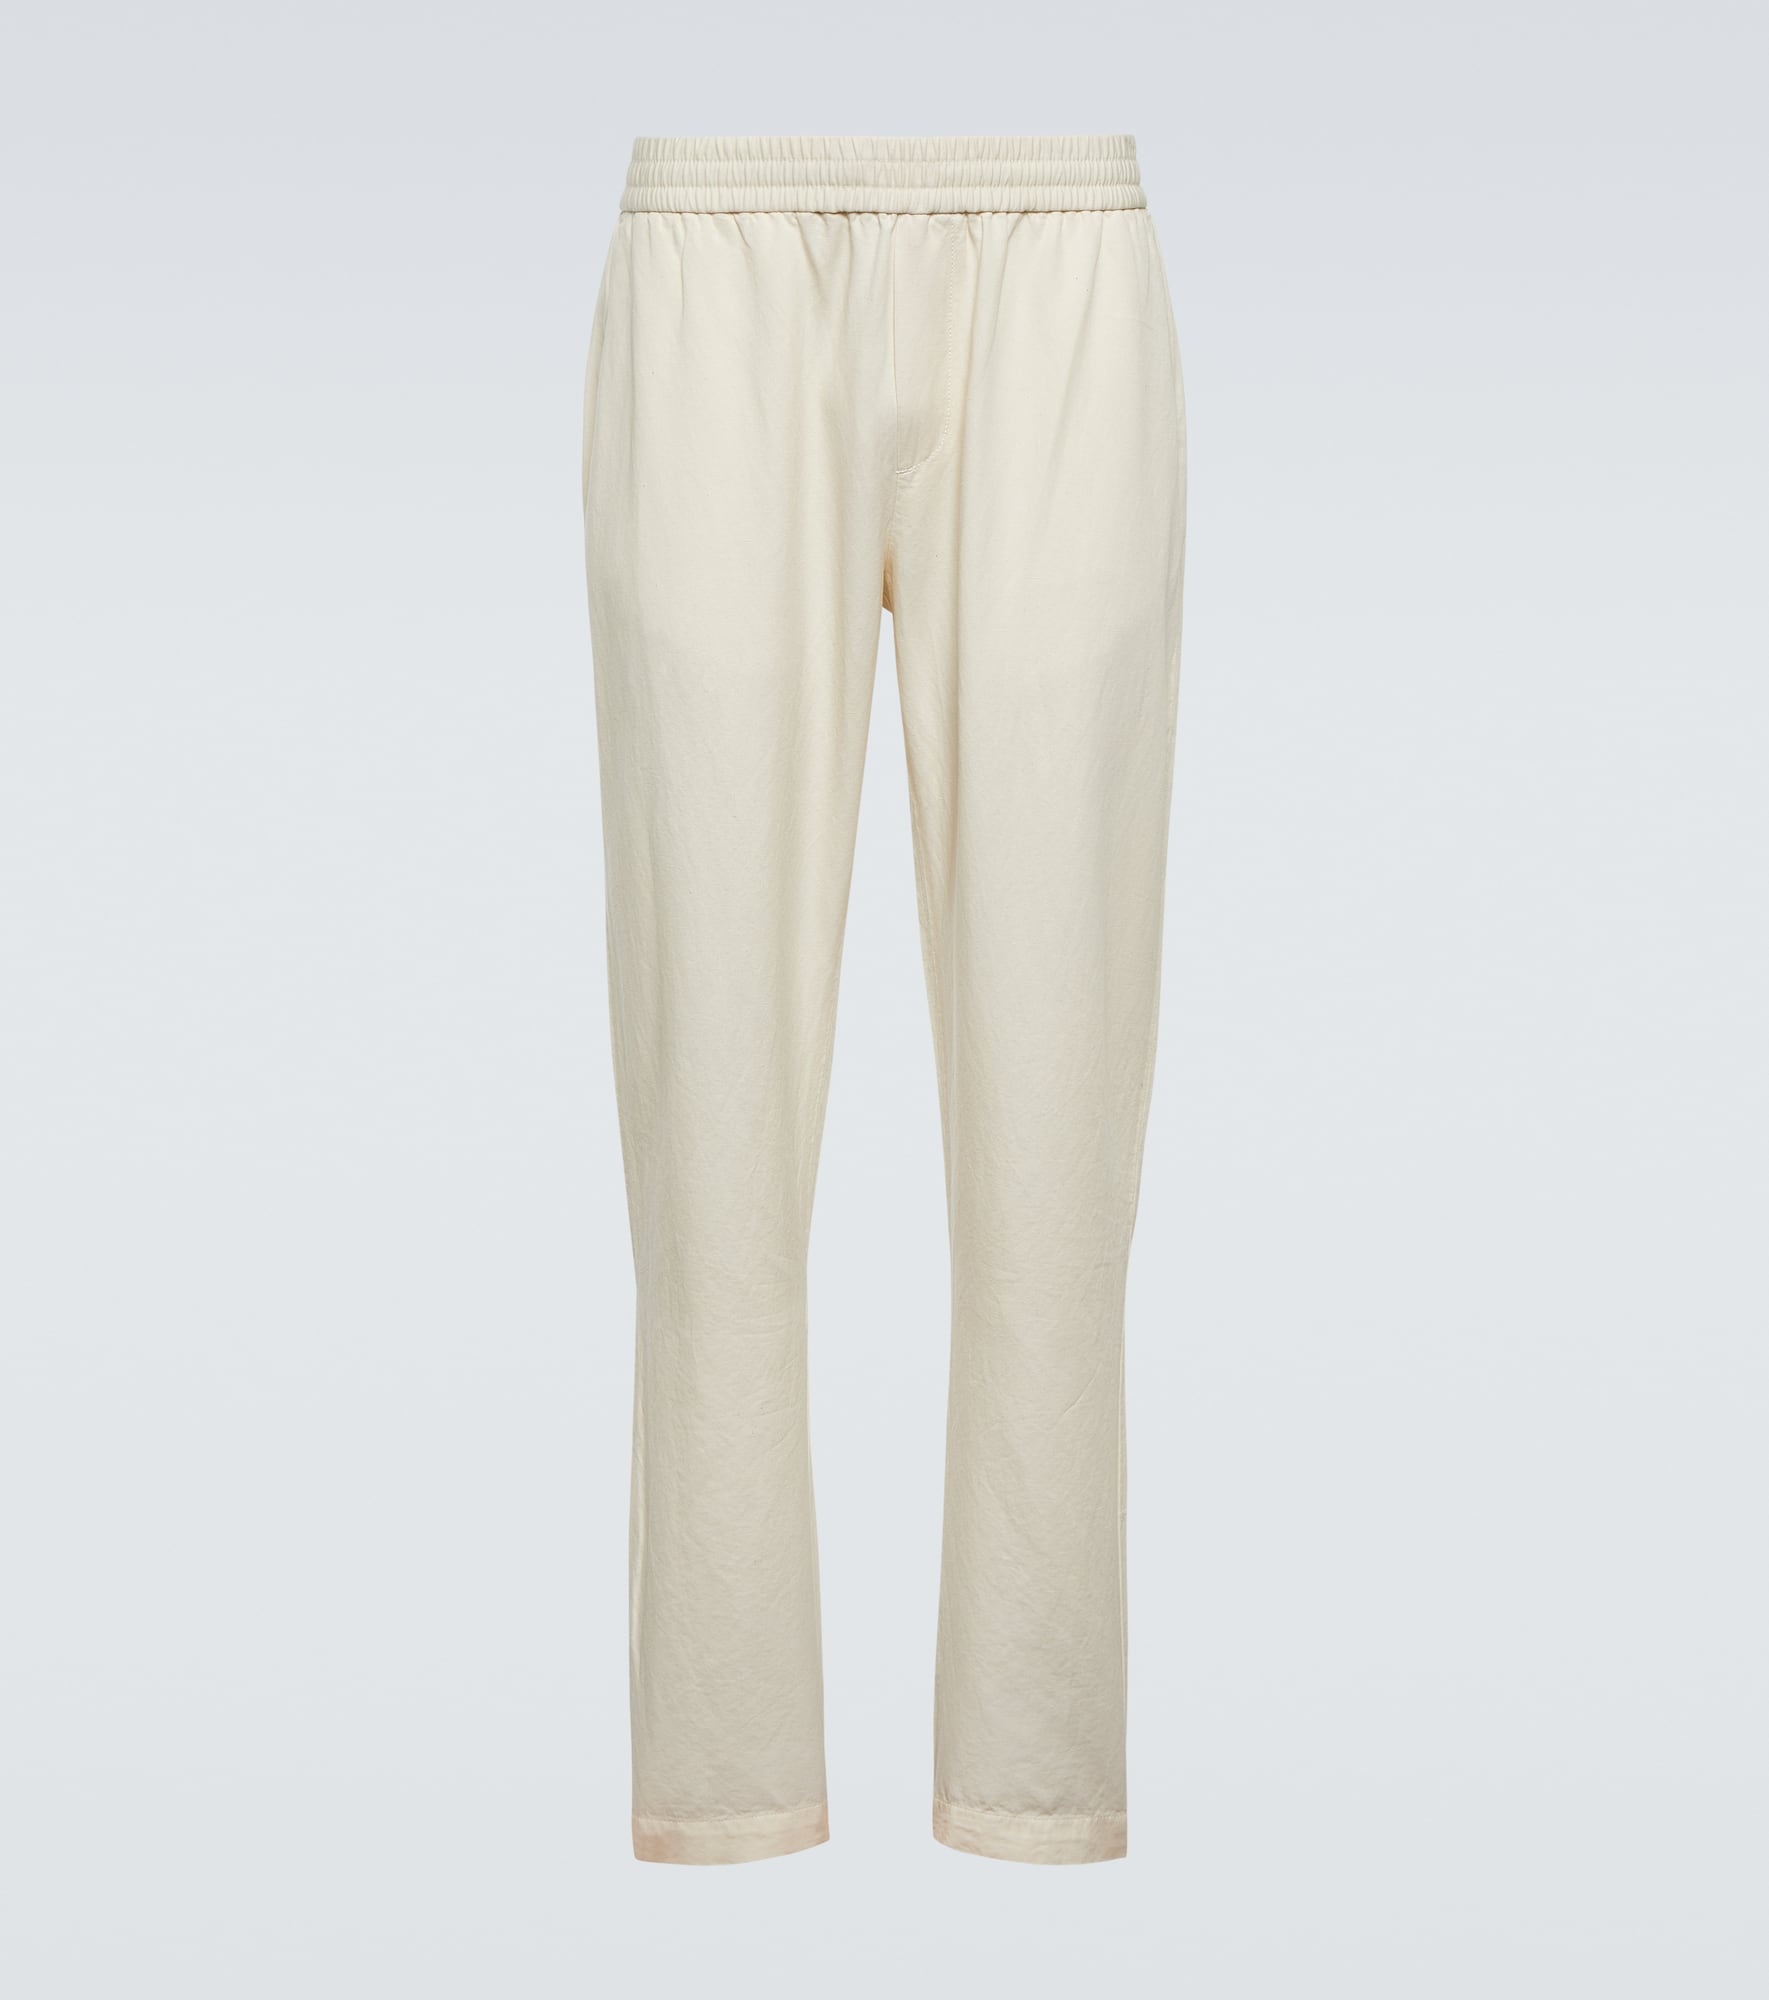 Cotton and linen pants - 1